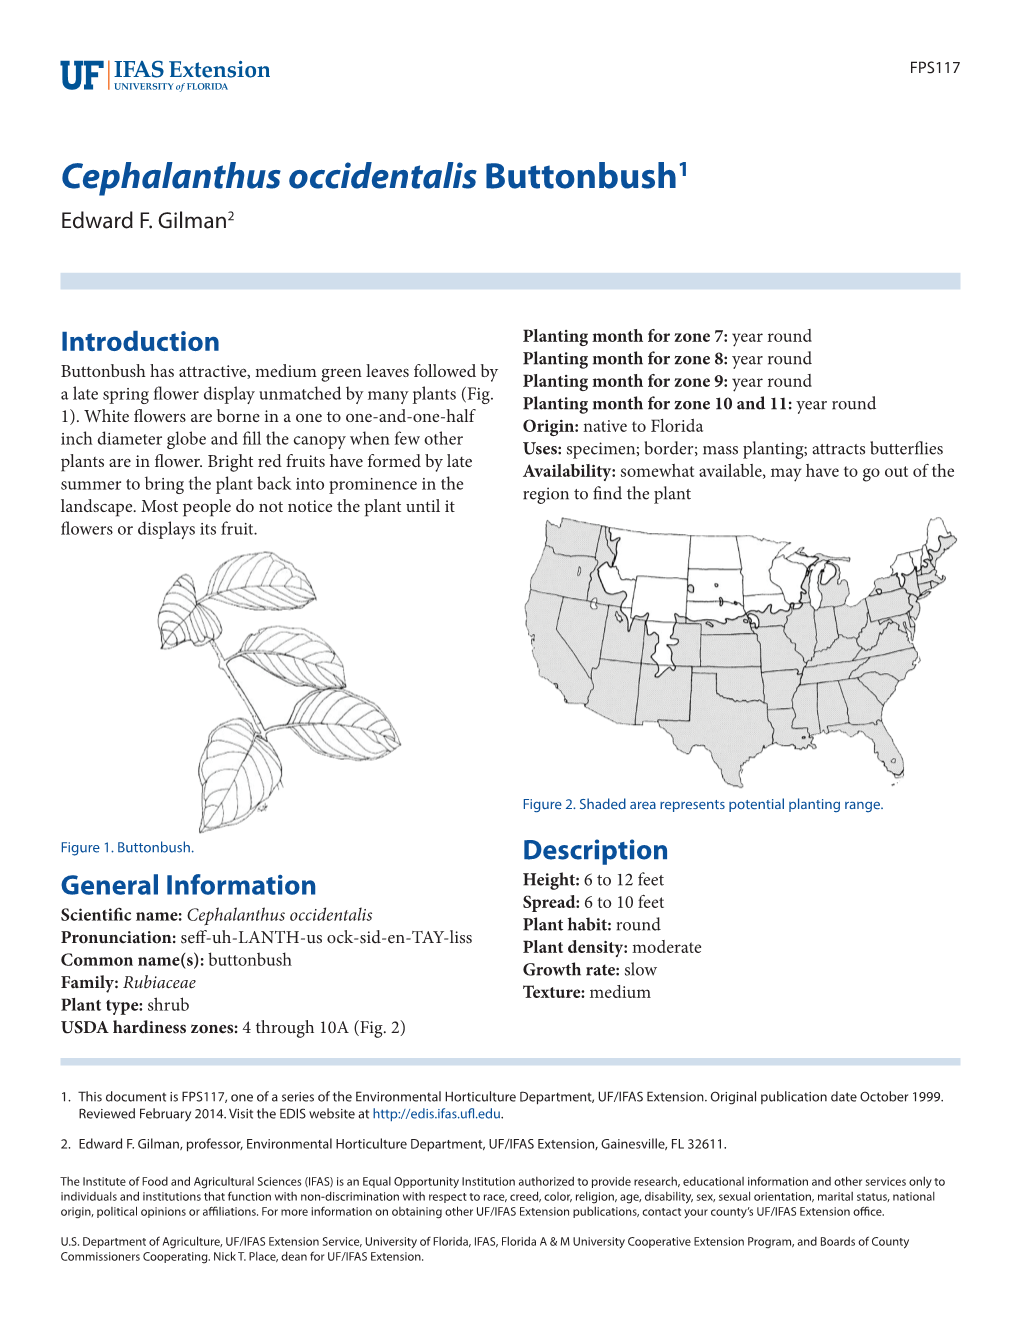 Cephalanthus Occidentalis Buttonbush1 Edward F